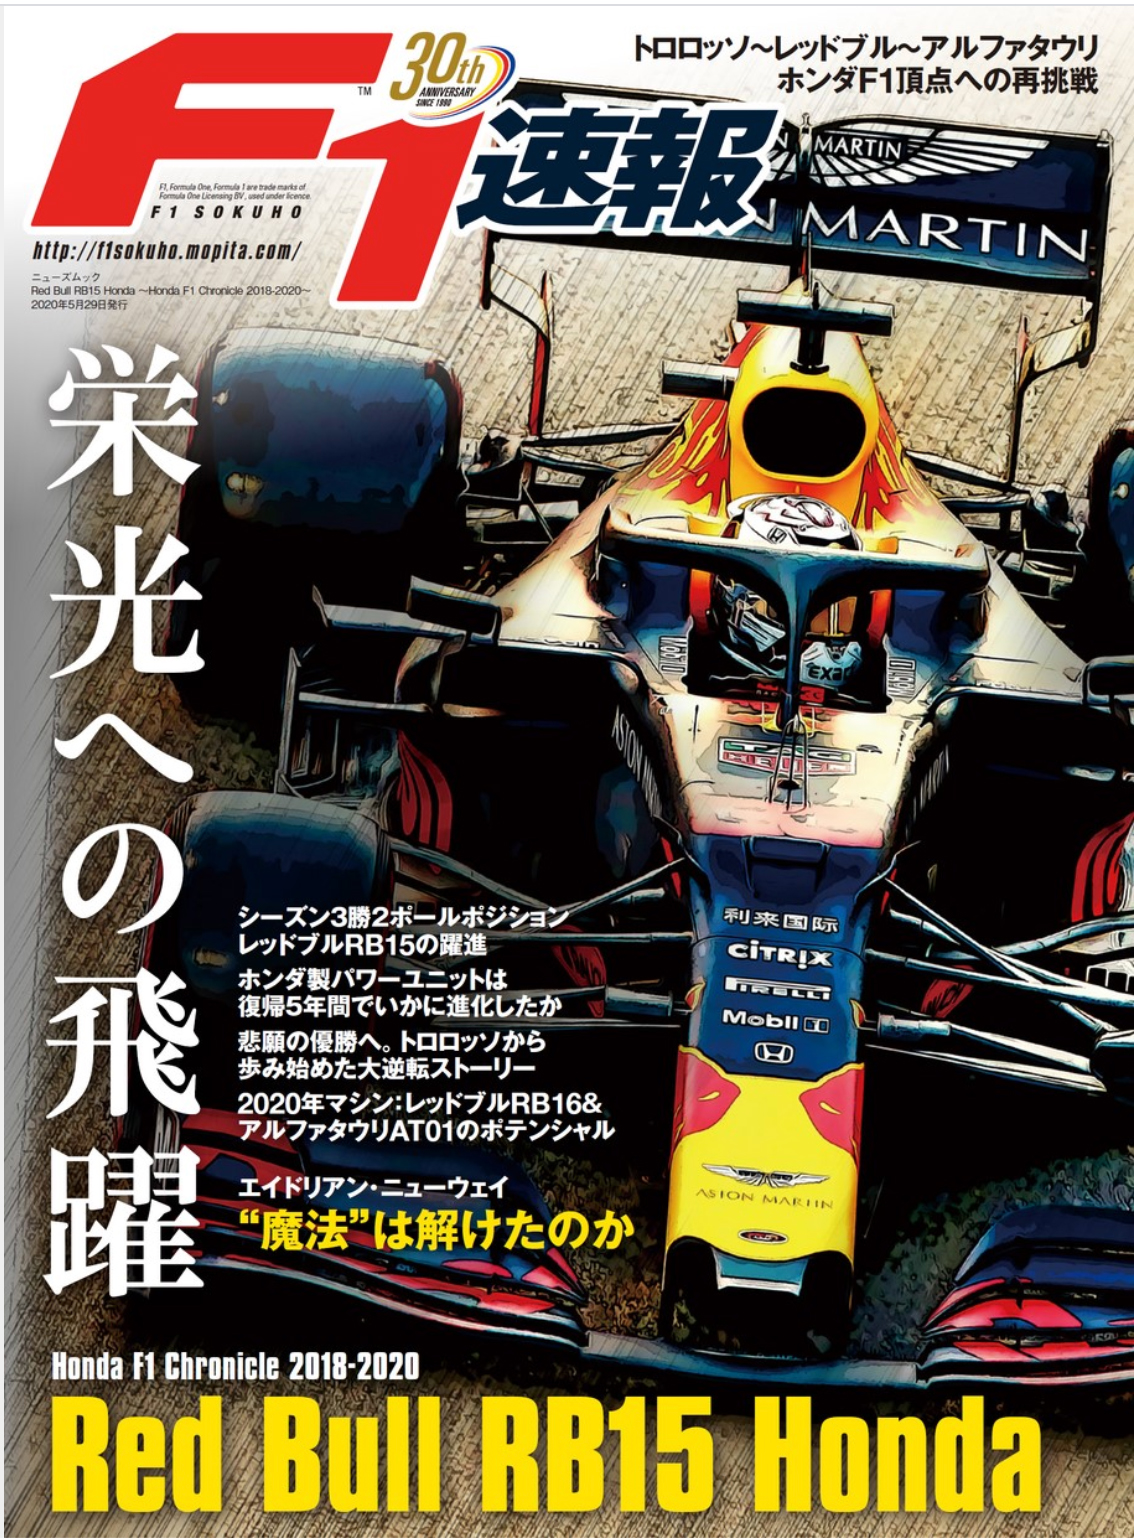 F1速報 特別編集 ホンダとレッドブル 共闘３年間の歴史を綴った Red Bull Rb15 Honda Honda F1 Chronicle 18 4月15日発売 三栄のプレスリリース